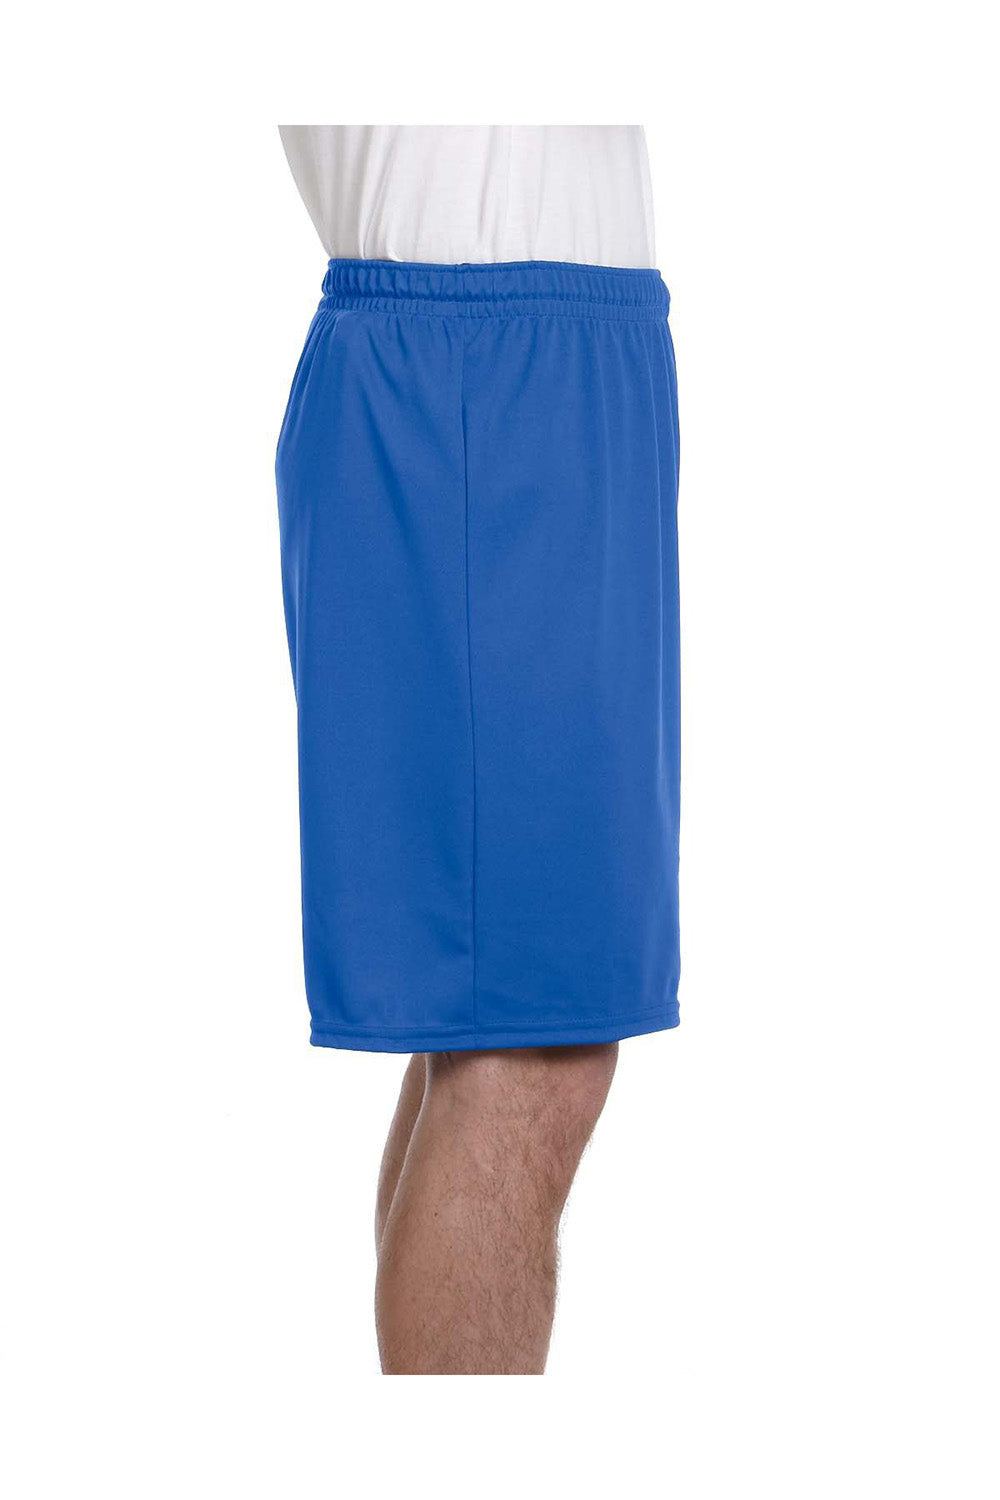 Augusta Sportswear 1420 Mens Training Shorts Royal Blue Model Side